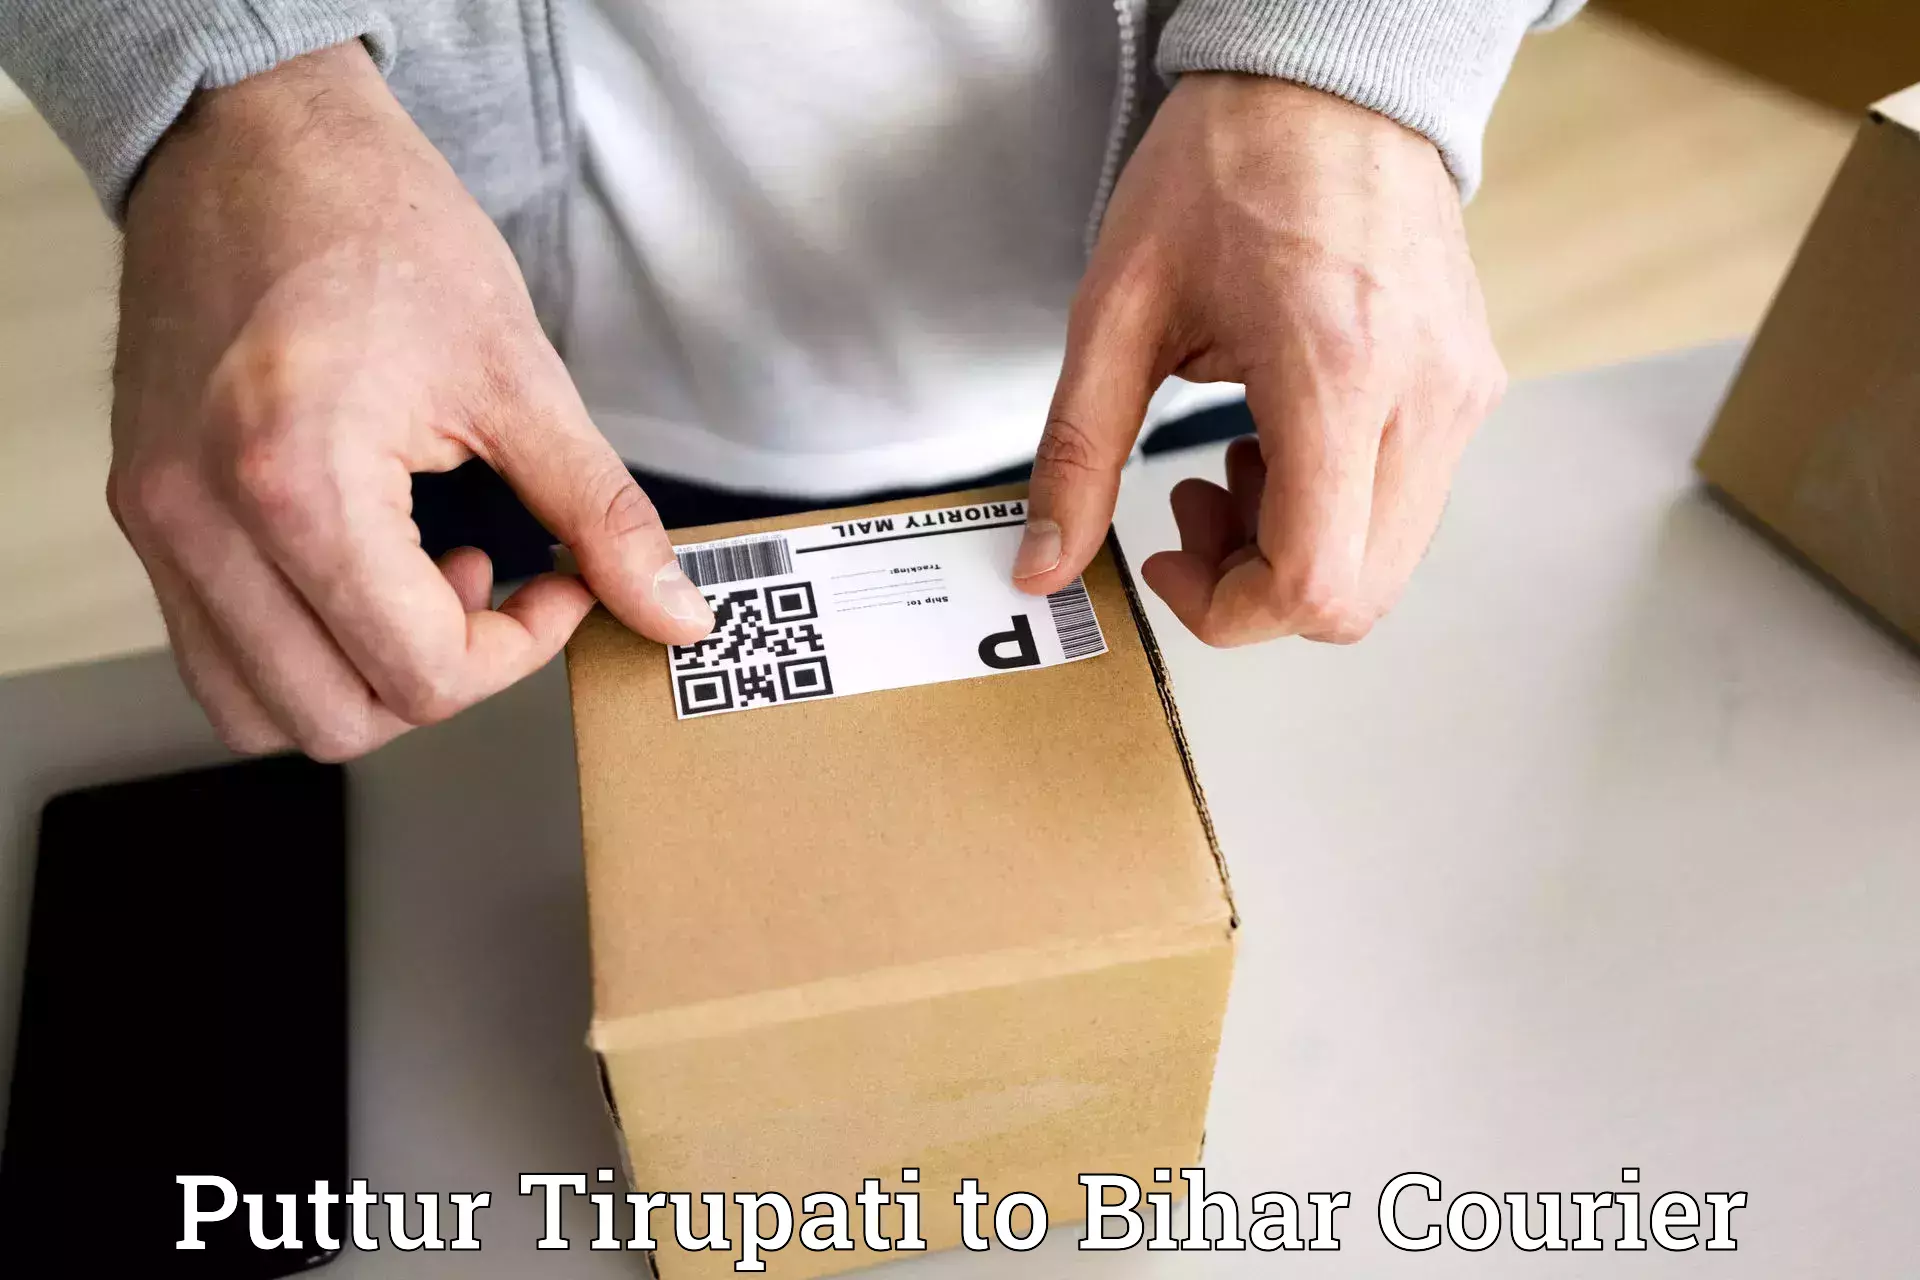 State-of-the-art courier technology Puttur Tirupati to Alamnagar